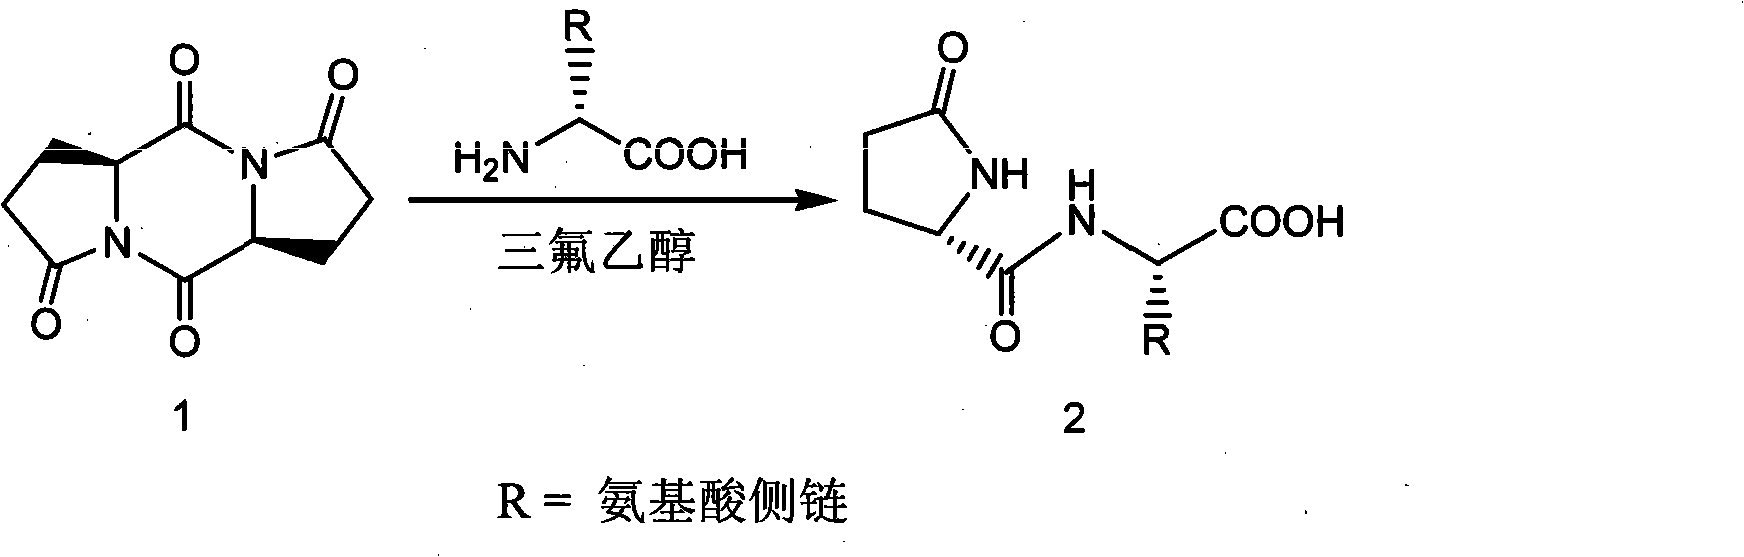 Synthetic method of pyroglutamyl small peptide